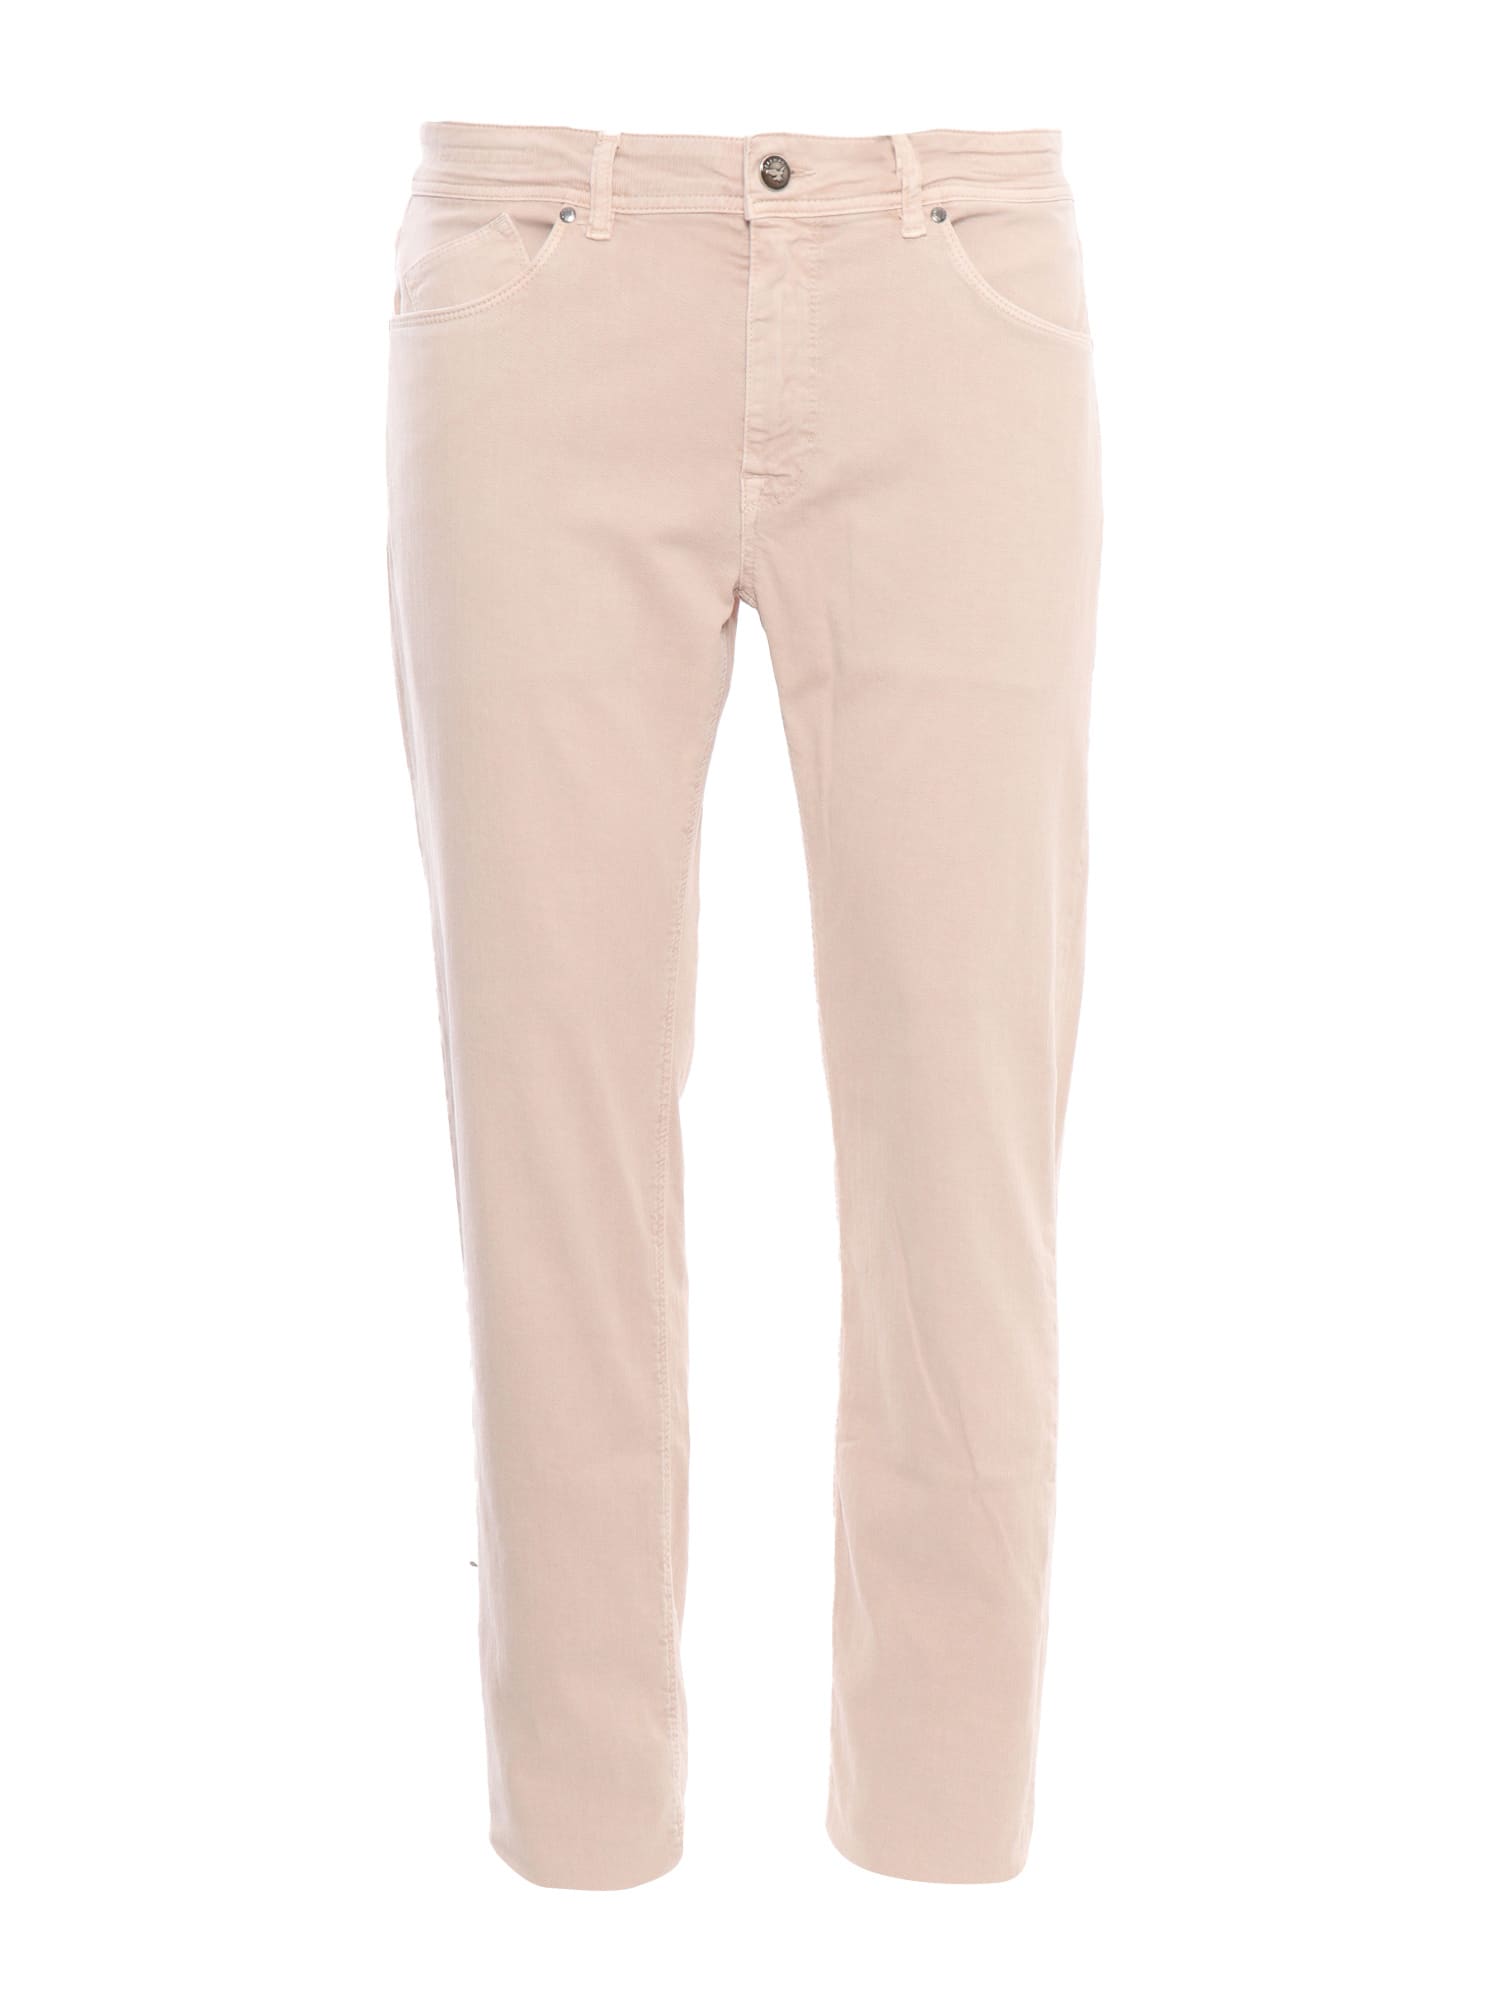 Shop Barmas Pink Undertone Denim Trousers